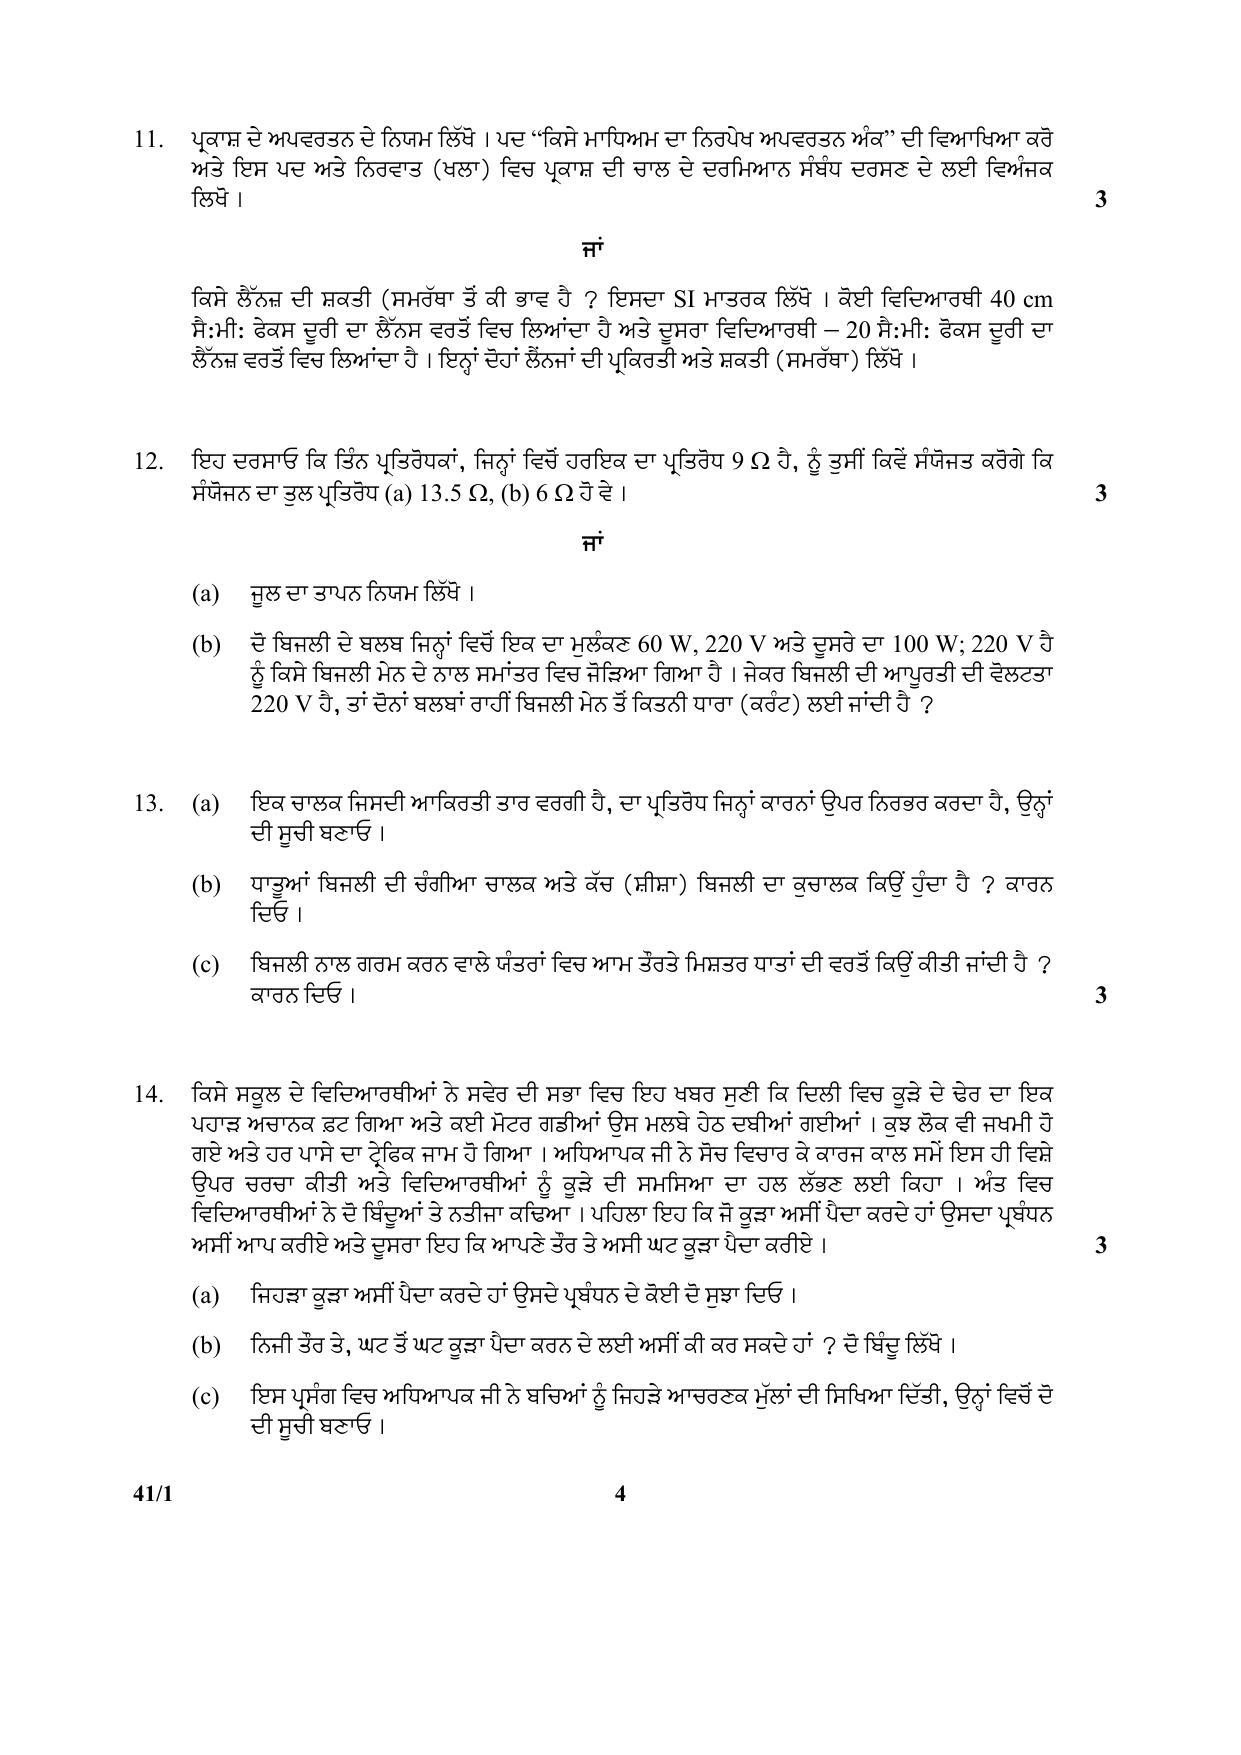 CBSE Class 10 41-1 (Science)_Punjabi 2018 Question Paper - Page 4